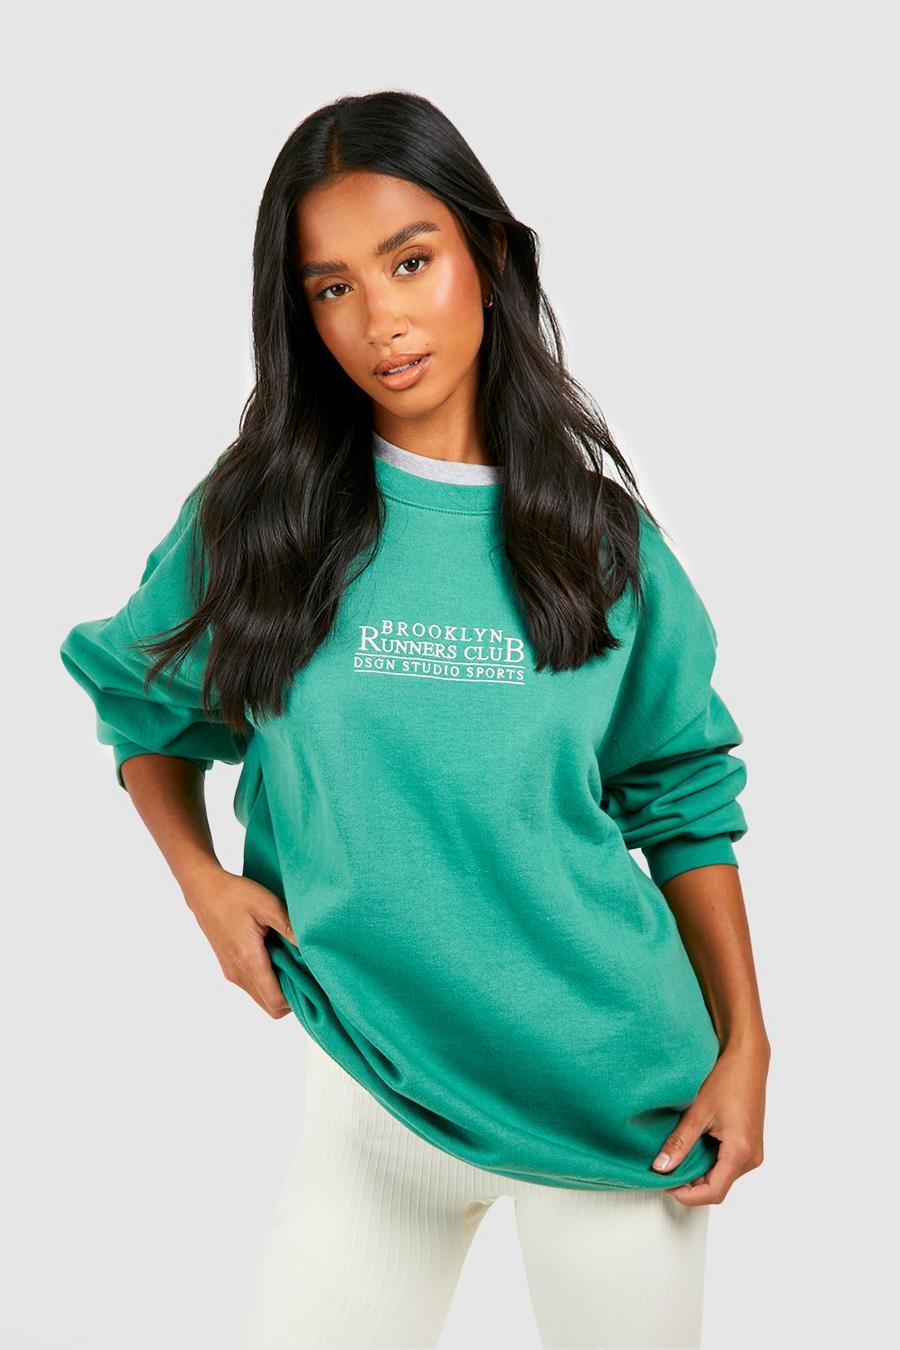 Green Petite Running Club Embroidered Sweatshirt   